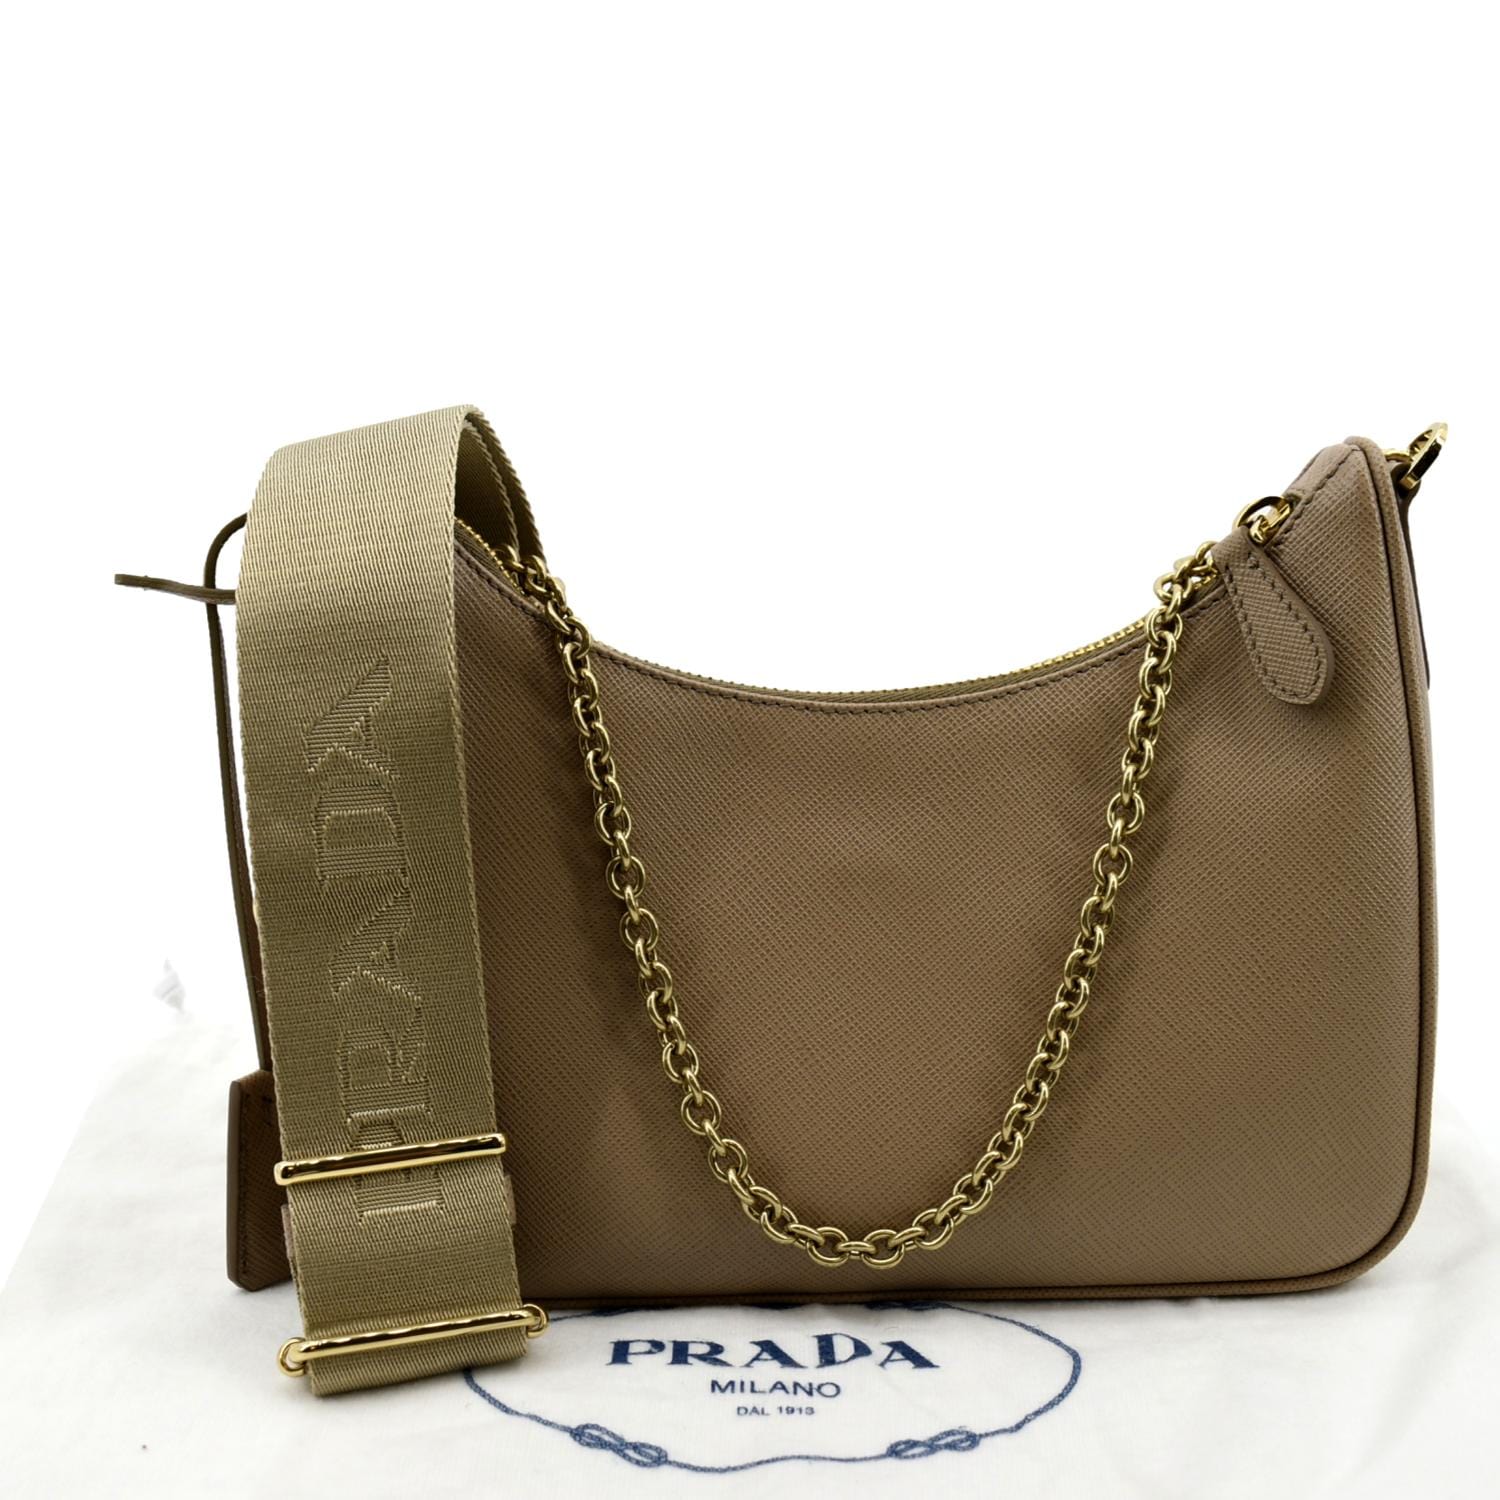 PRADA Re-Edition 2005 Saffiano Leather Shoulder Bag Beige